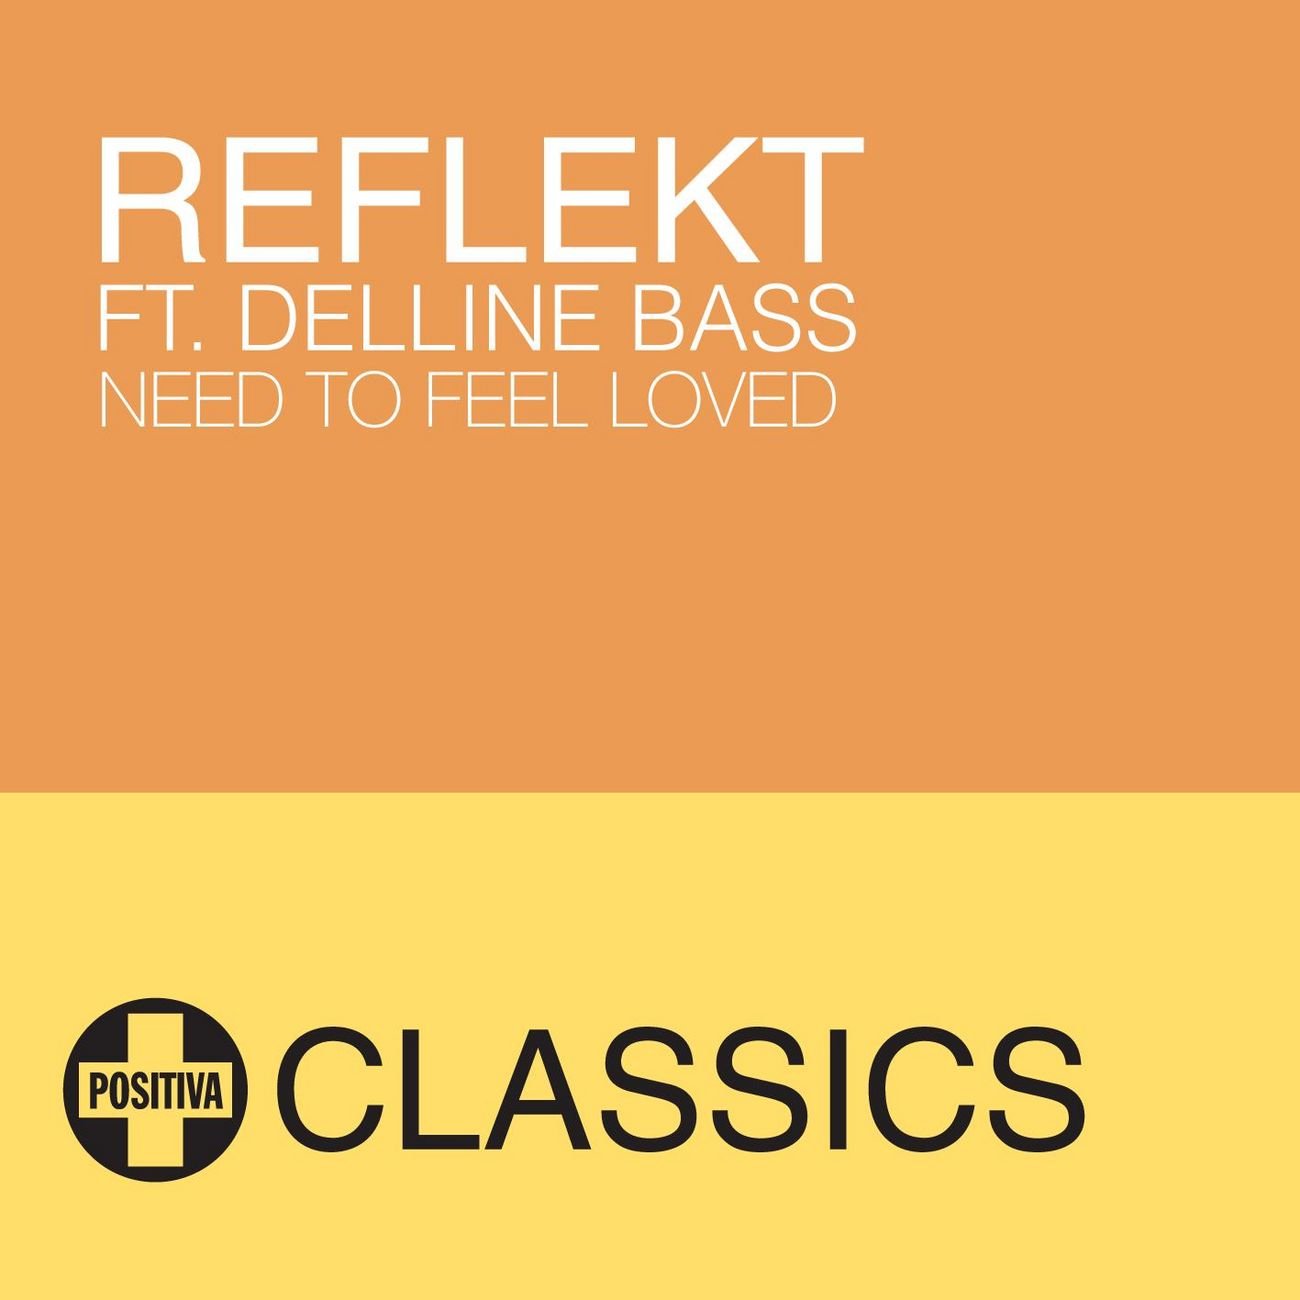 Delline bass need to feel loved. Reflekt ft. Delline Bass need to feel Loved. Reflekt need to feel Loved. Adam k Soha need to feel. Reflekt feat. Delline Bass.